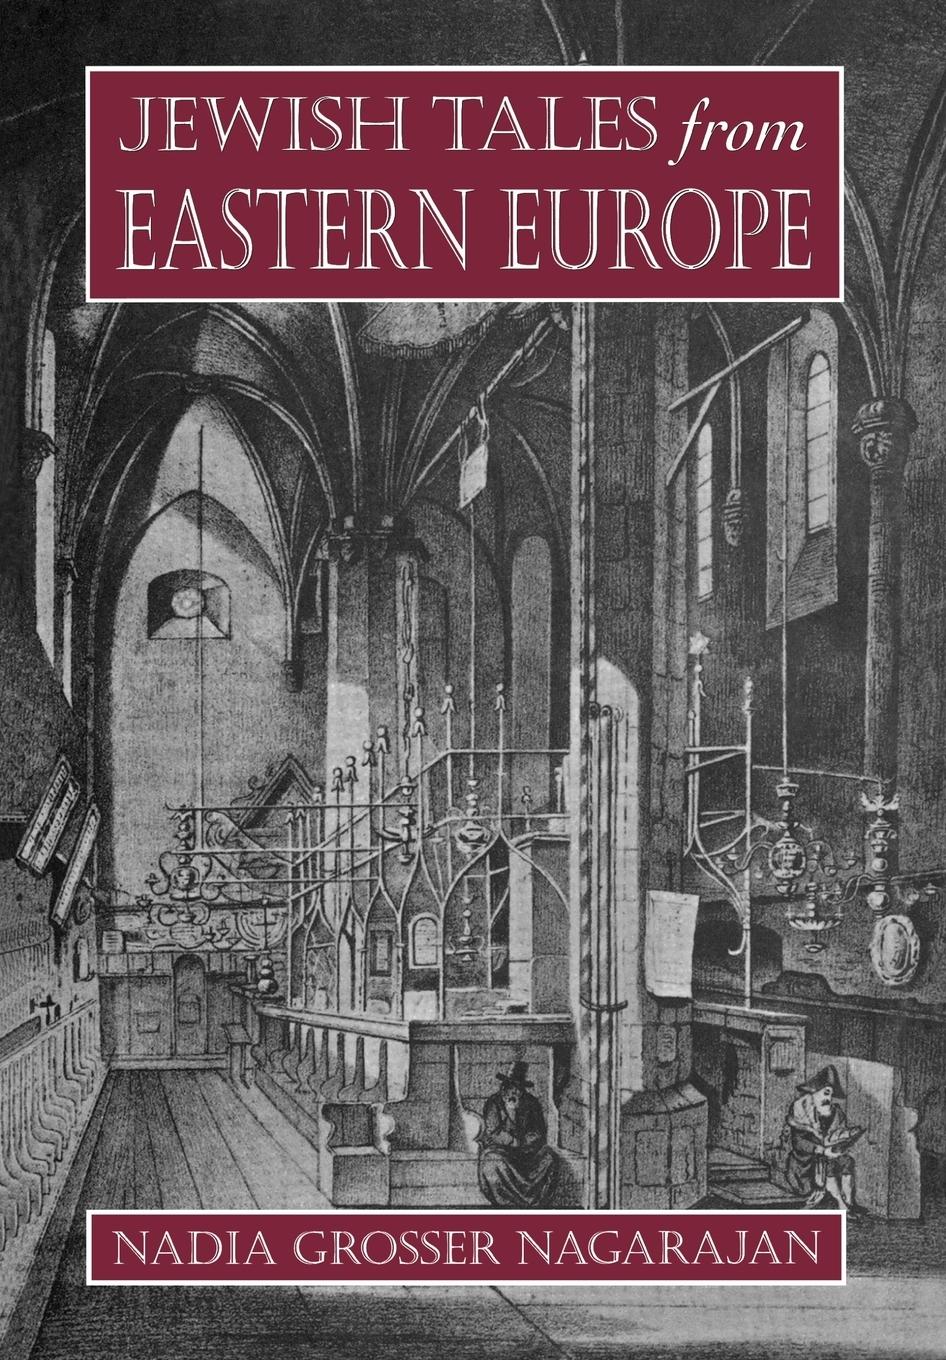 Jewish Tales from Eastern Europe - Nagarajan, Nadia Grosser